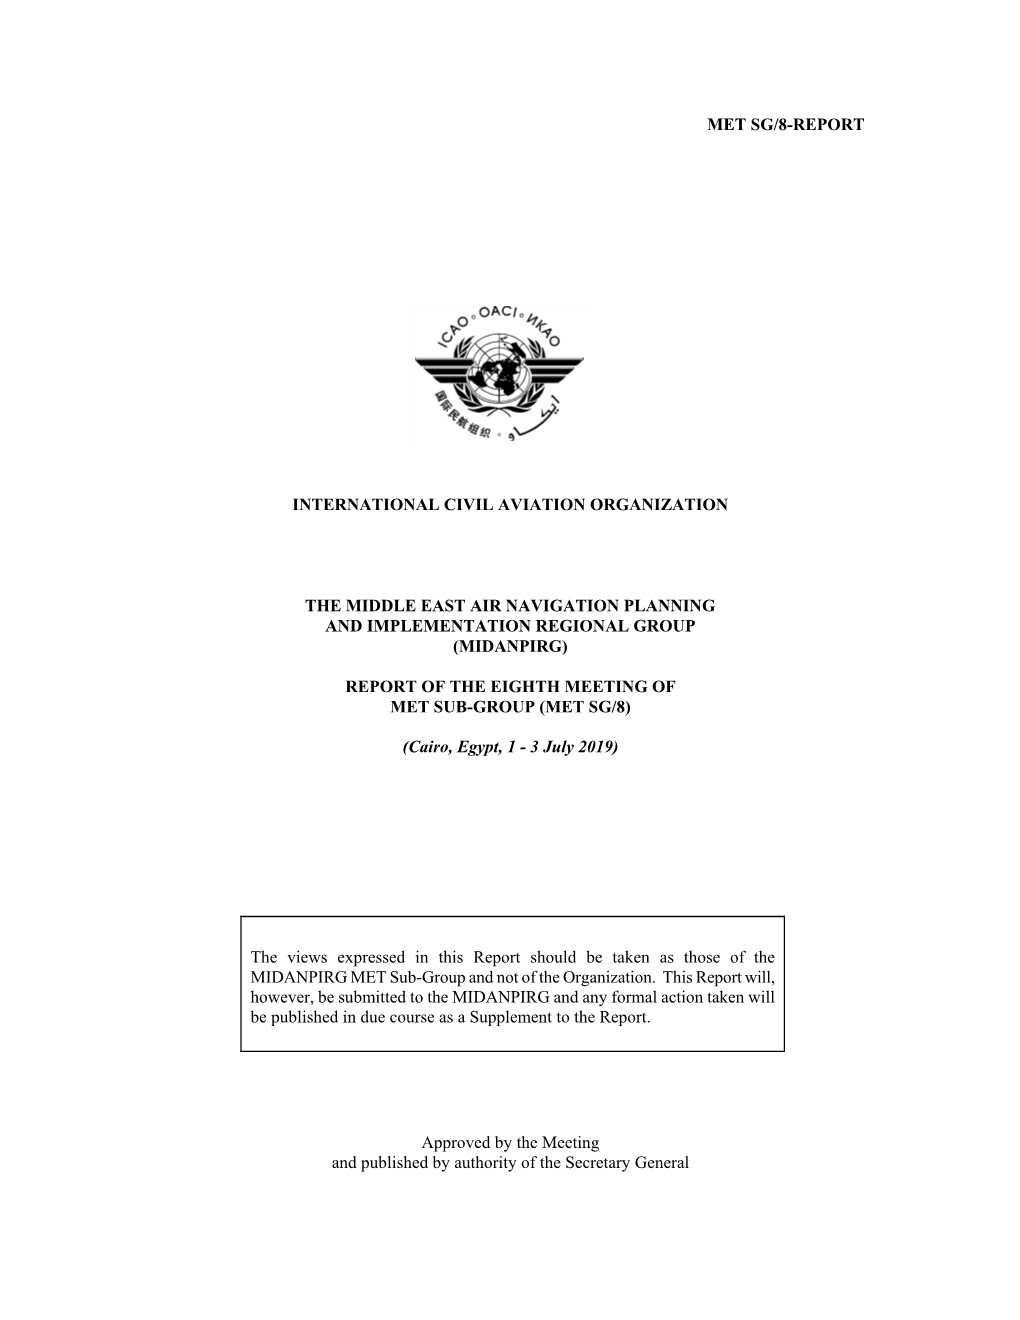 Met Sg/8-Report International Civil Aviation